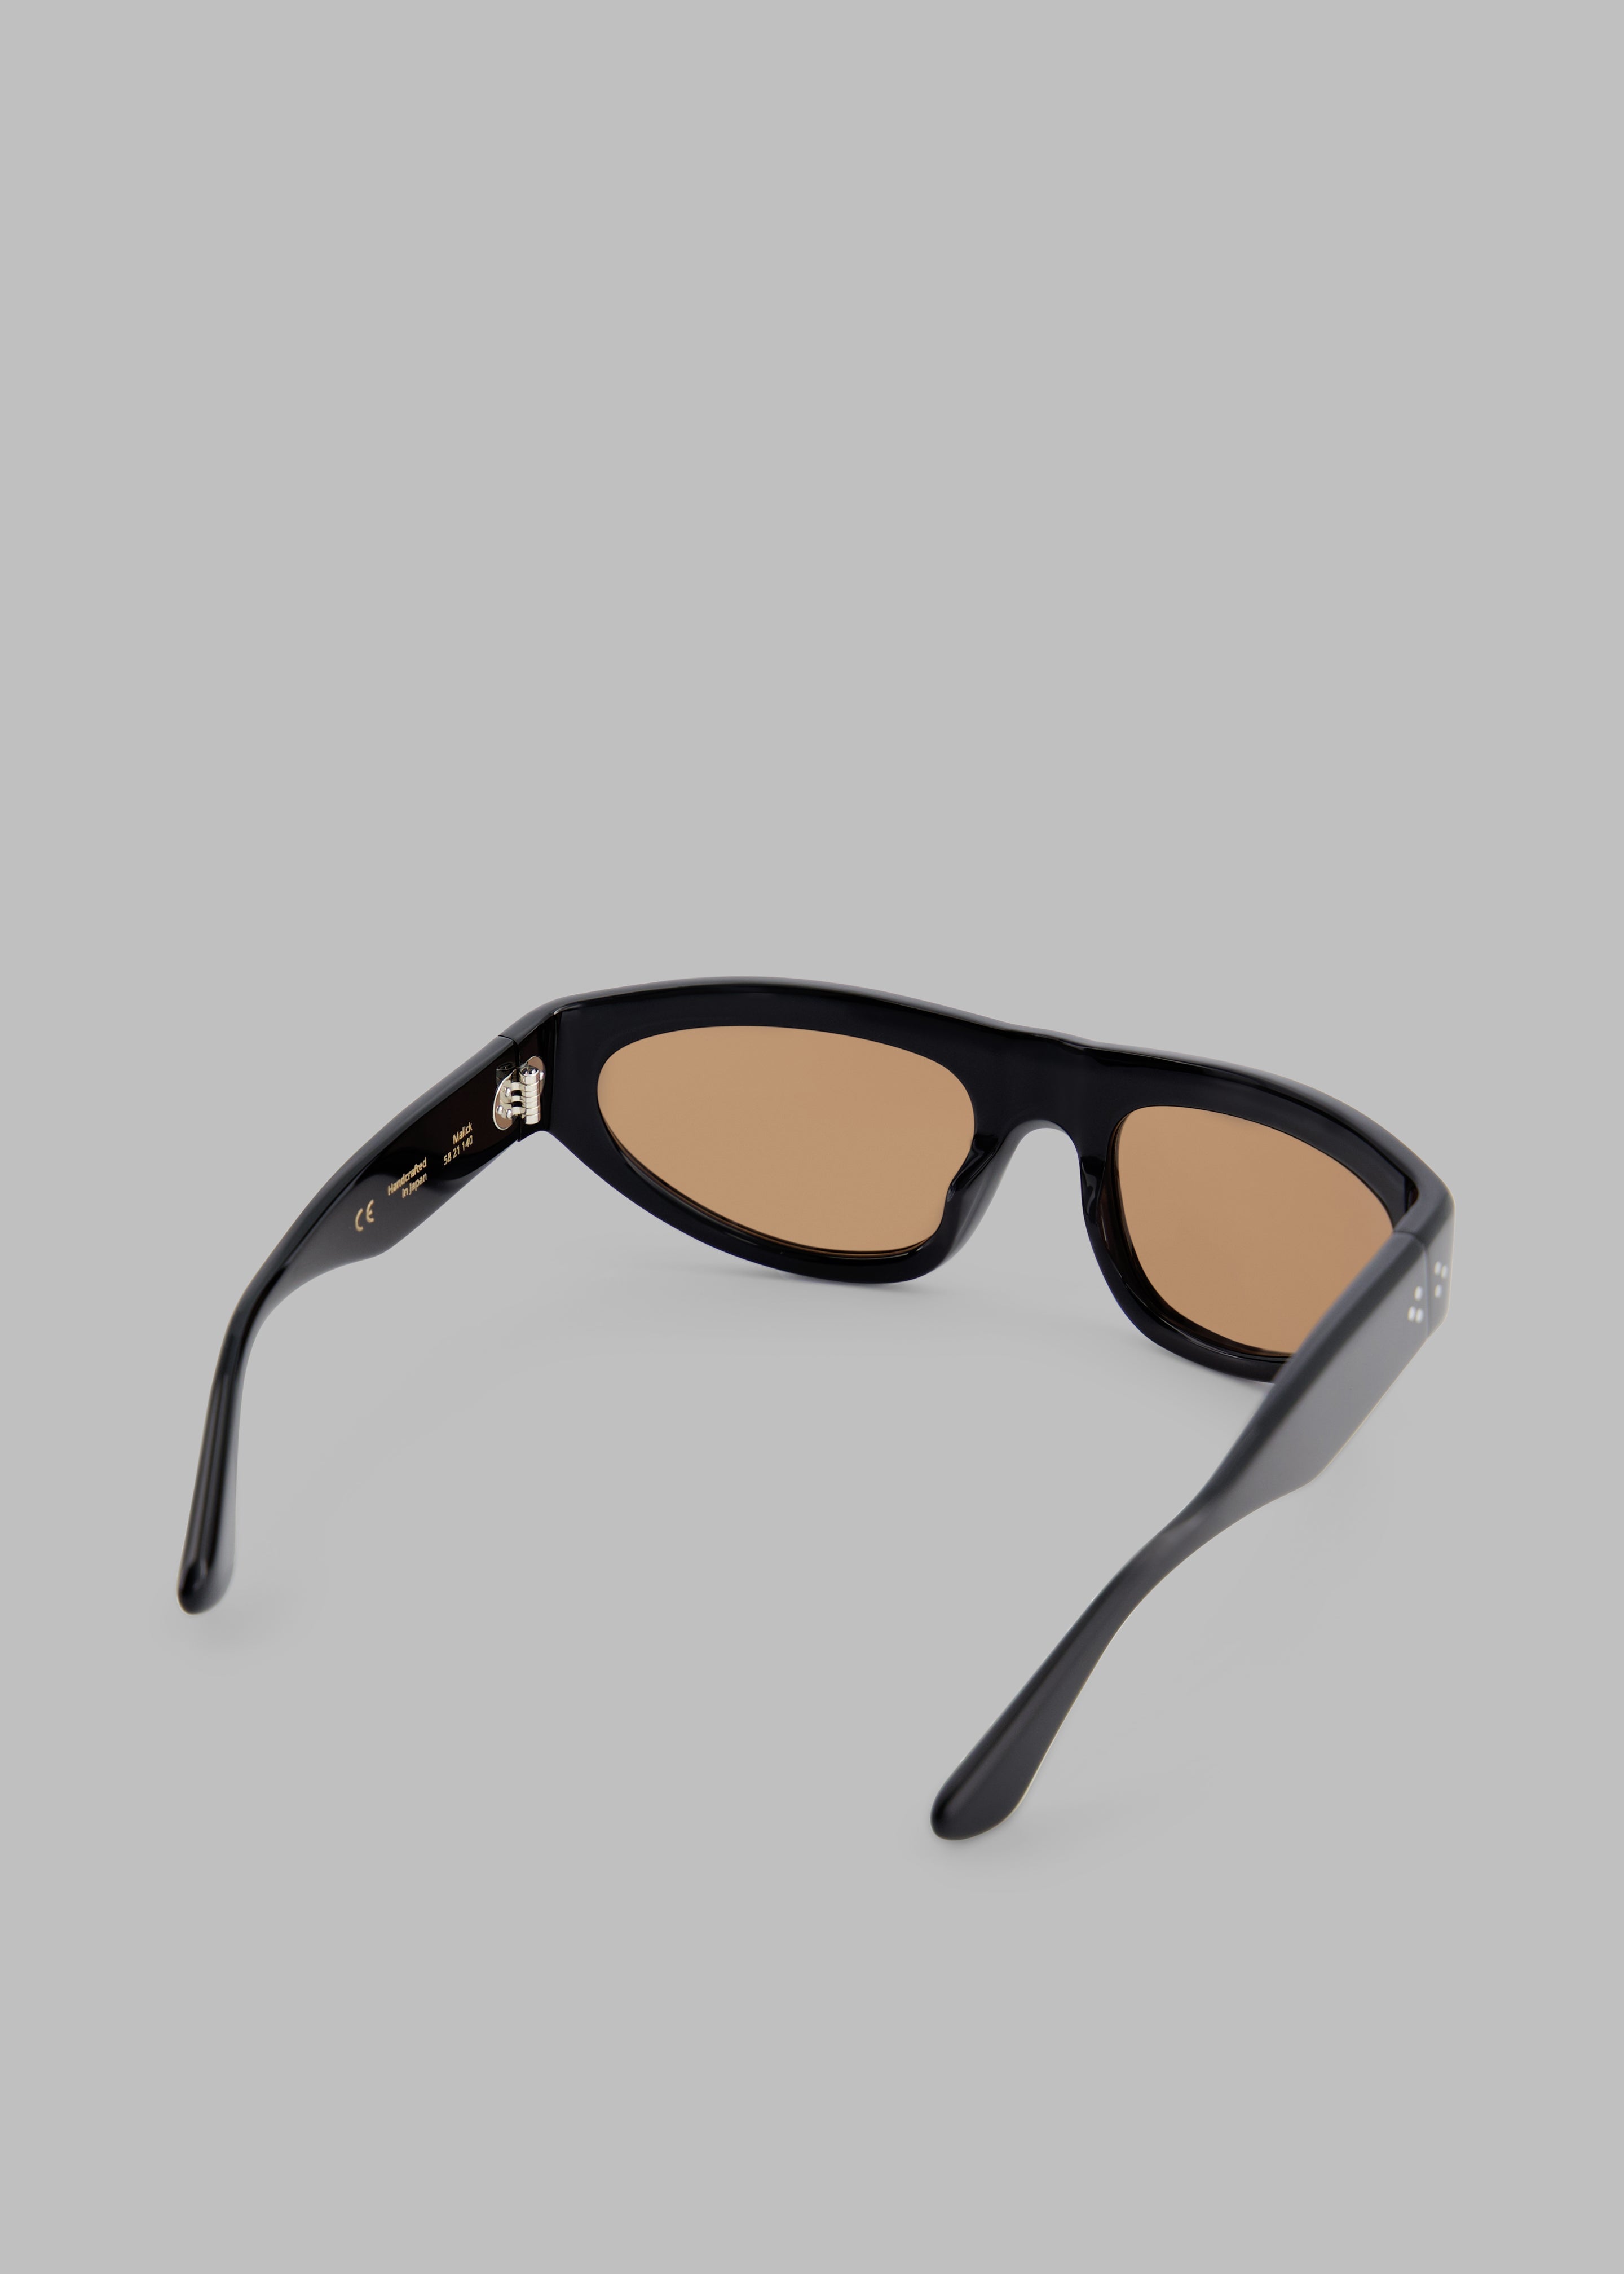 Port Tanger Malick Sunglasses - Black Acetate/Tobacco Lens - 6